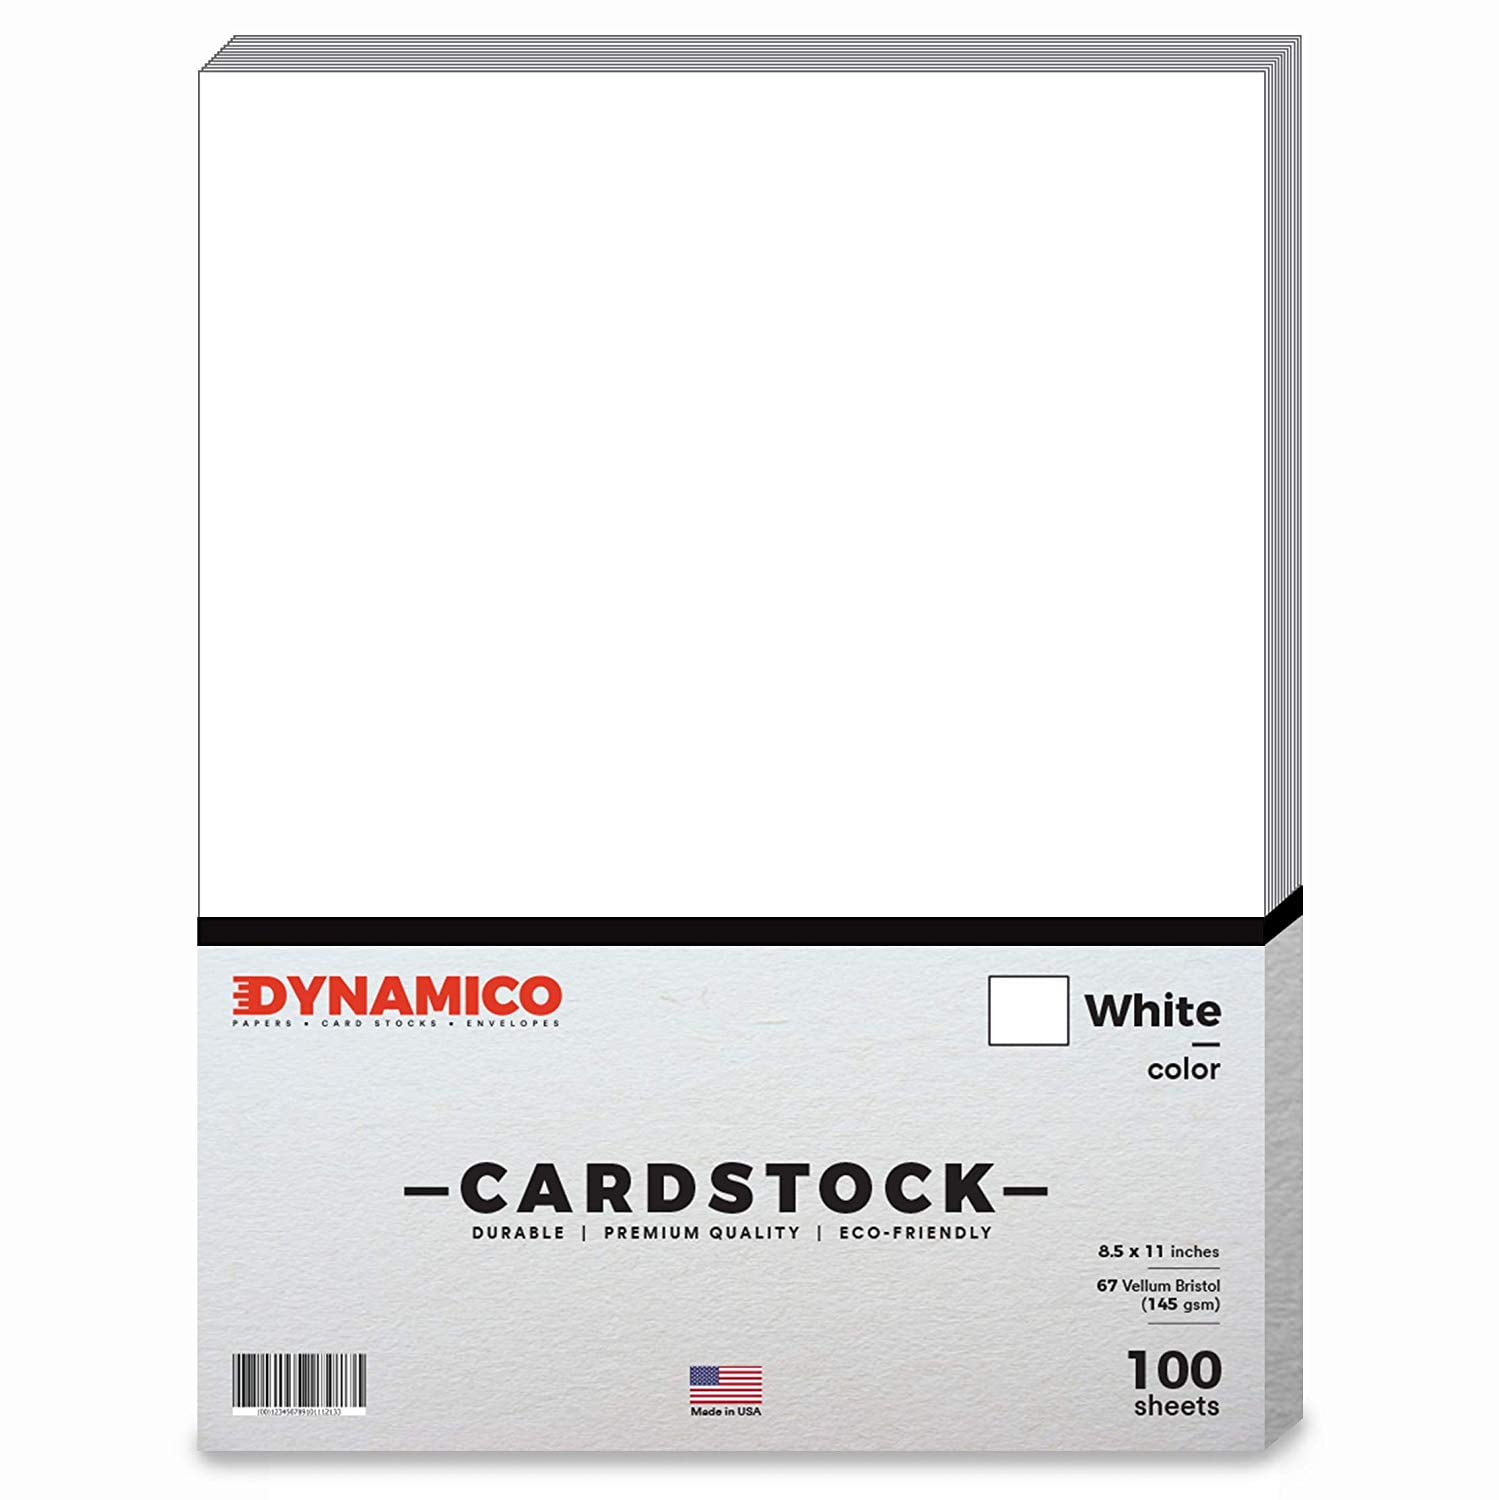 100 Sheets White Cardstock 8.5 x 11 Certificate Paper, Goefun White Card  Stock Printer Paper for Invitations, Menus, Wedding, DIY Cards